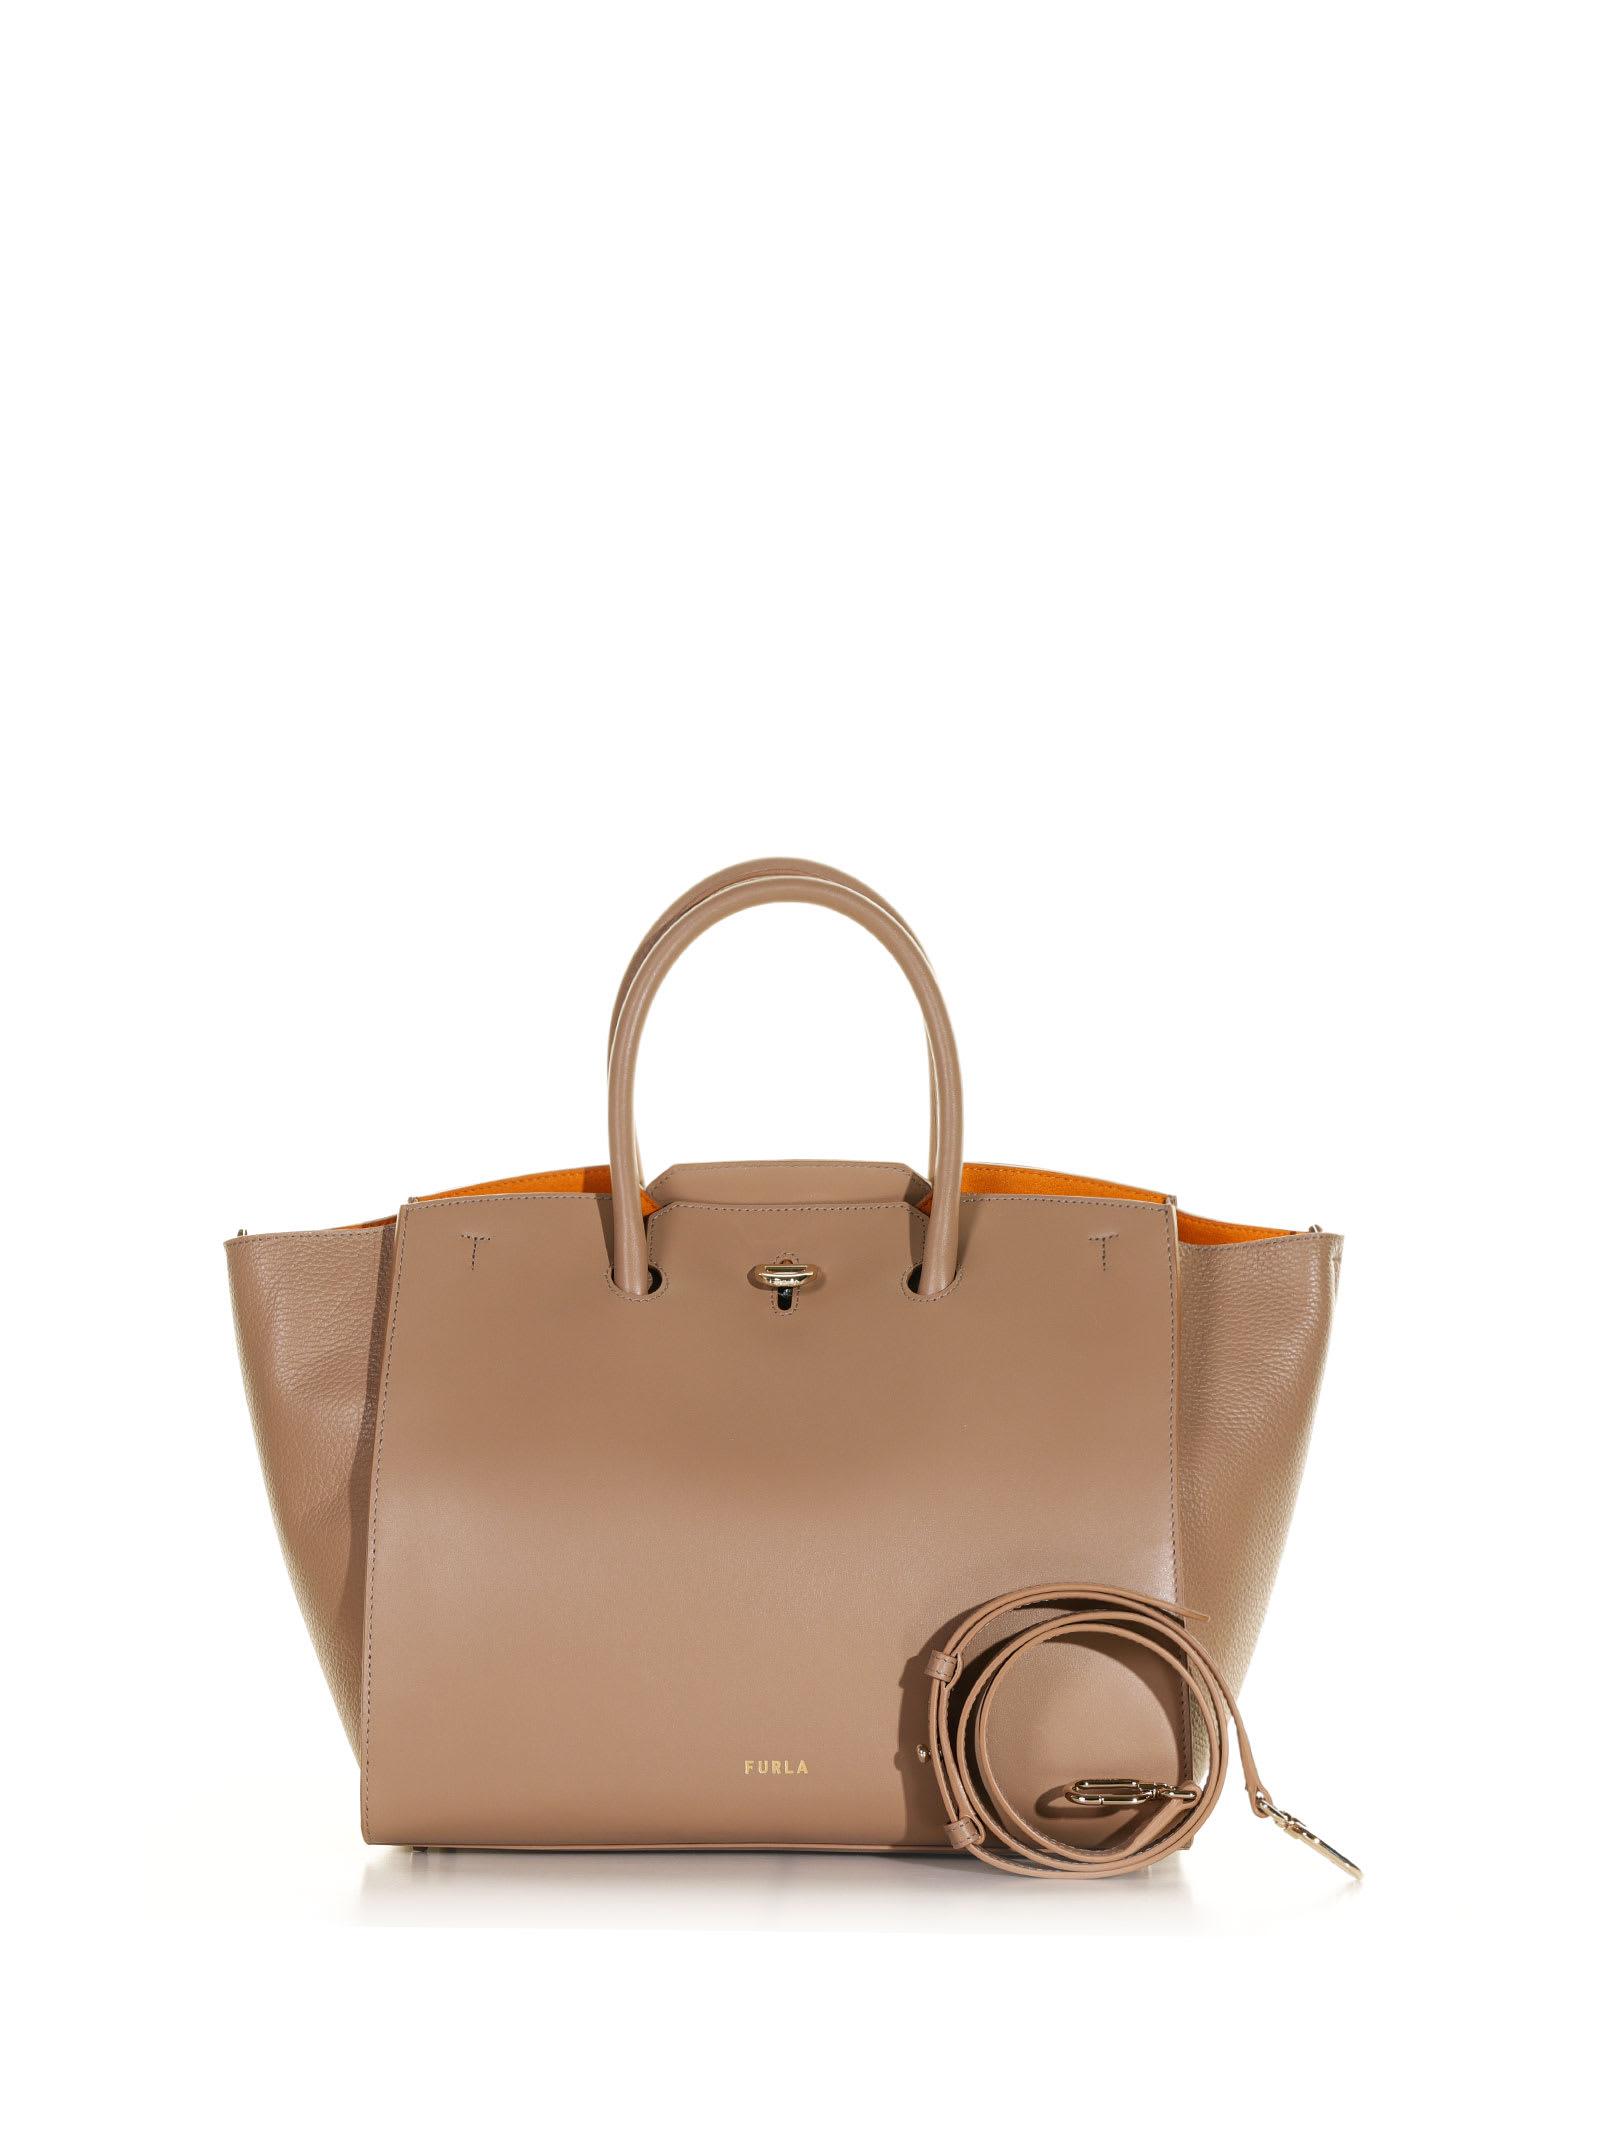 Furla Genesi L Leather Shopping Bag in Natural